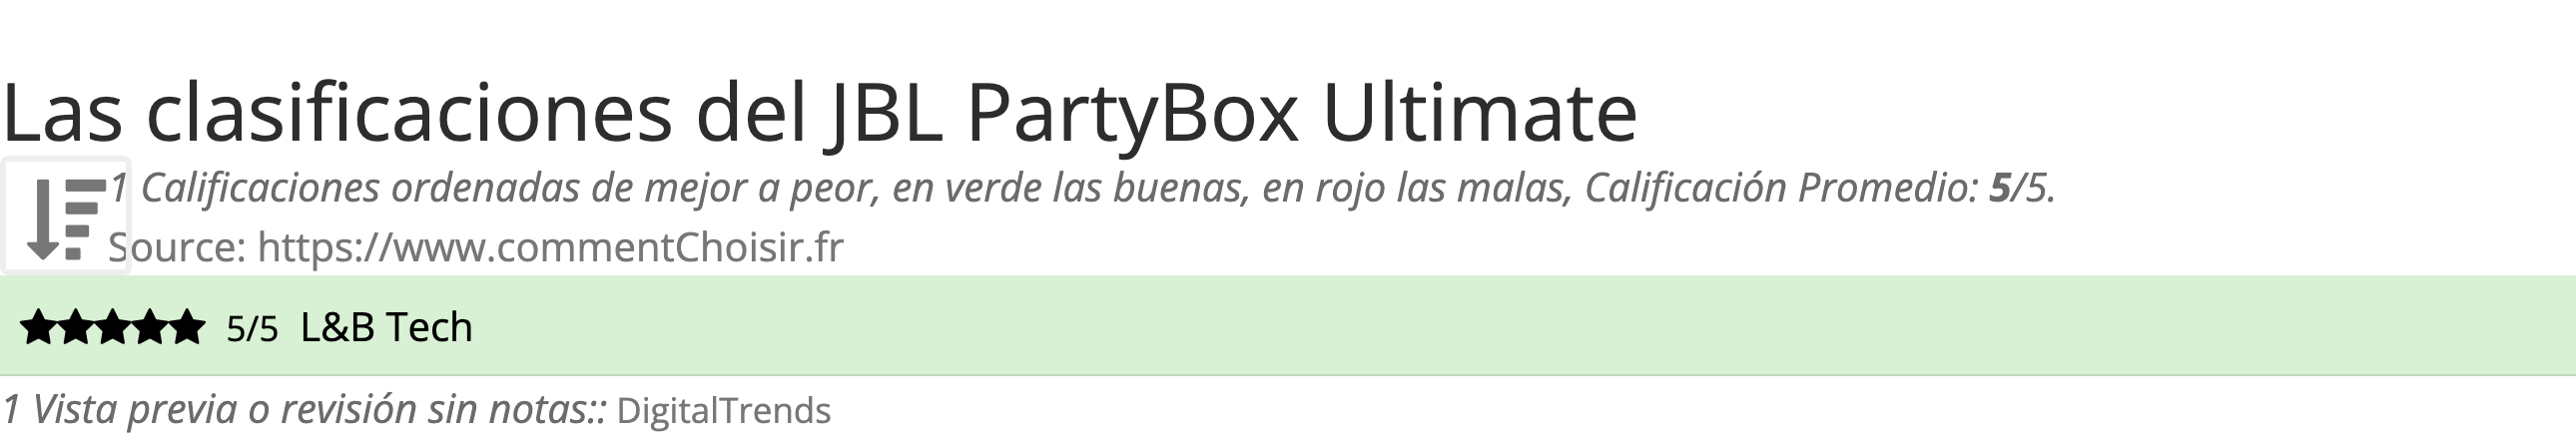 Ratings JBL PartyBox Ultimate